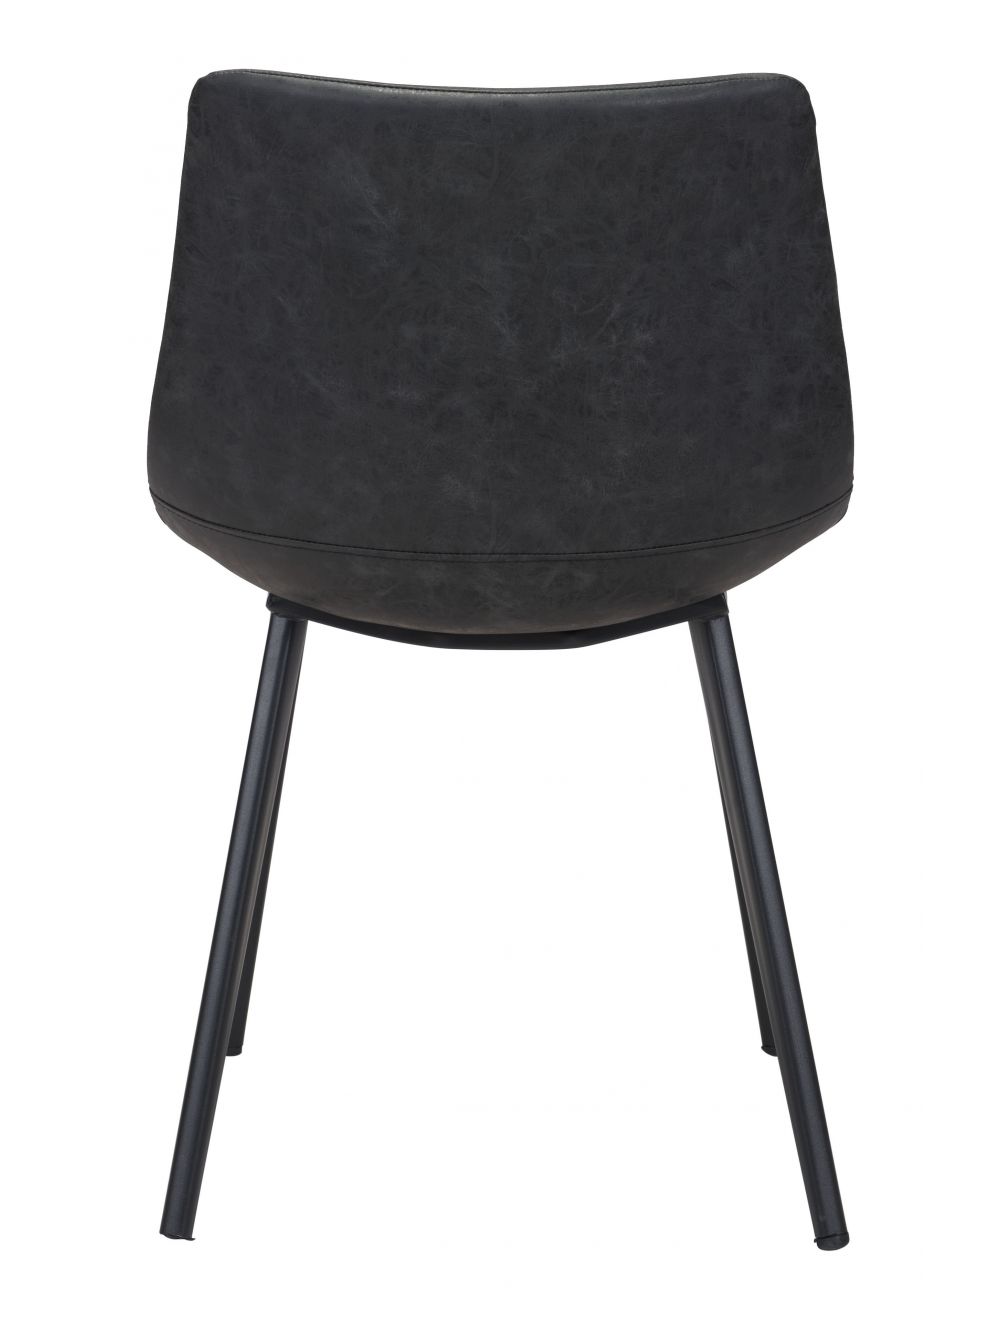 Daniel Dining Chair (Set of 2) Vintage Black